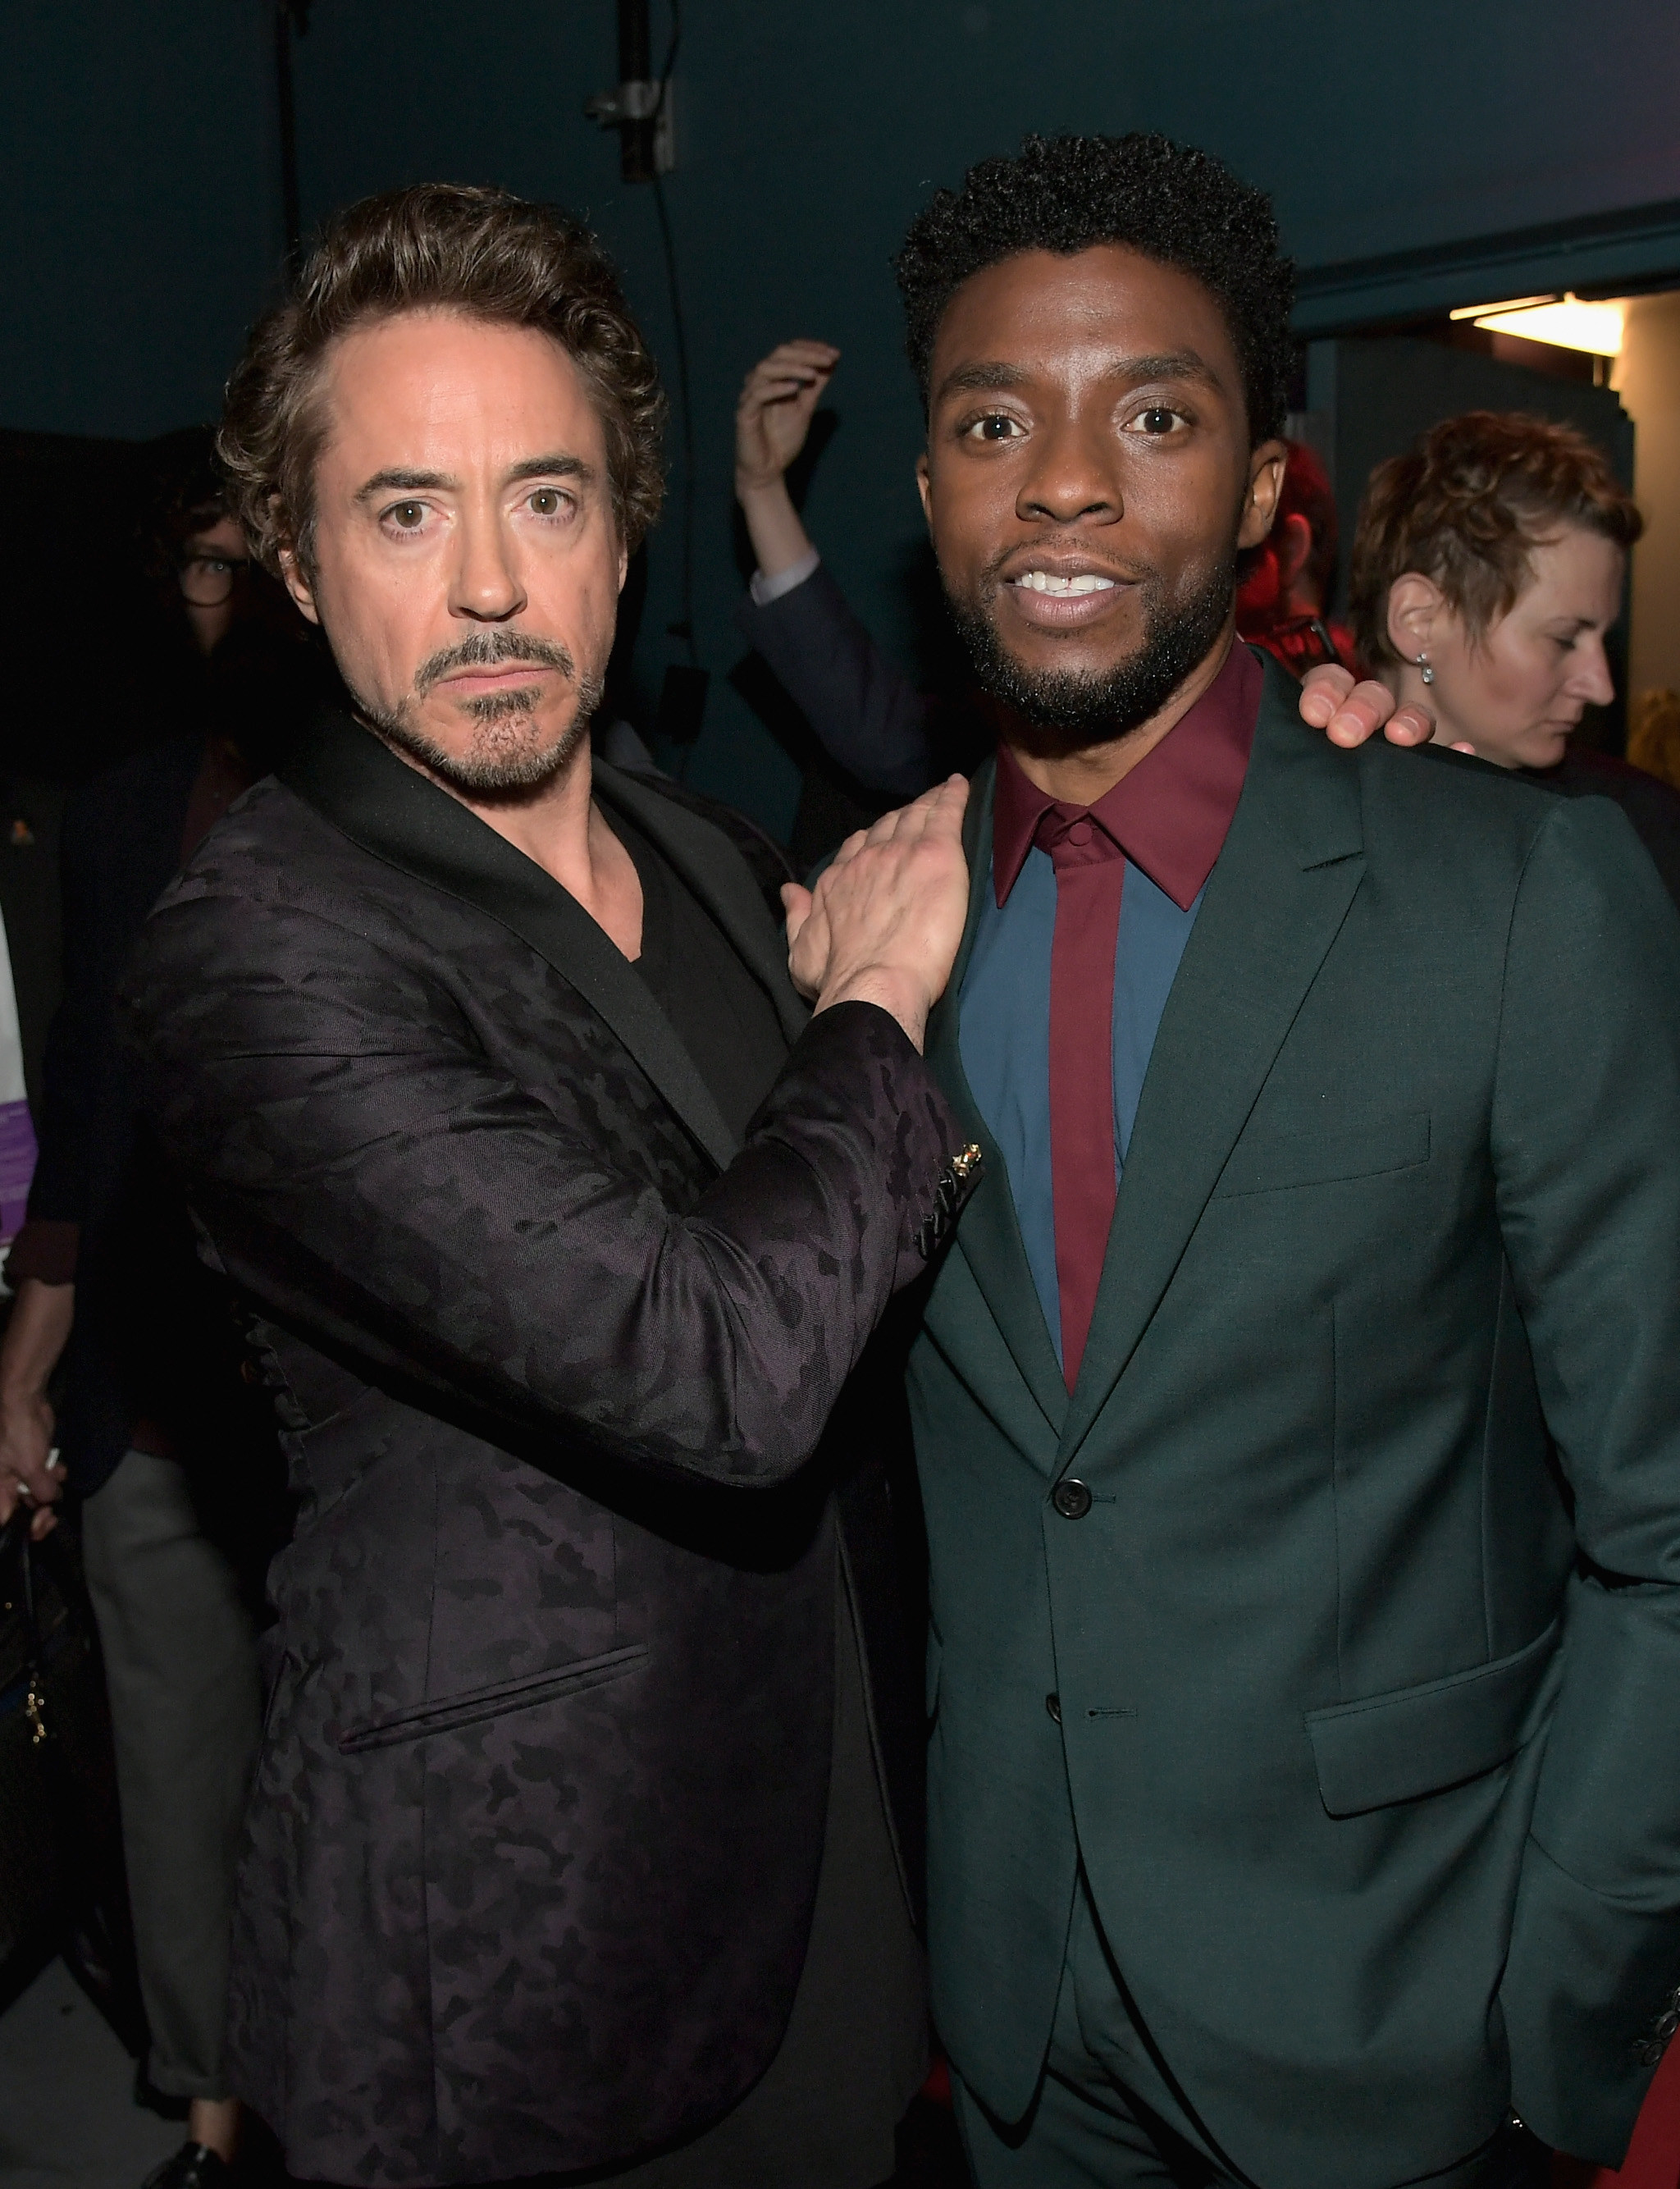 Robert Downey Jr. and Chadwick Boseman pose for a photo